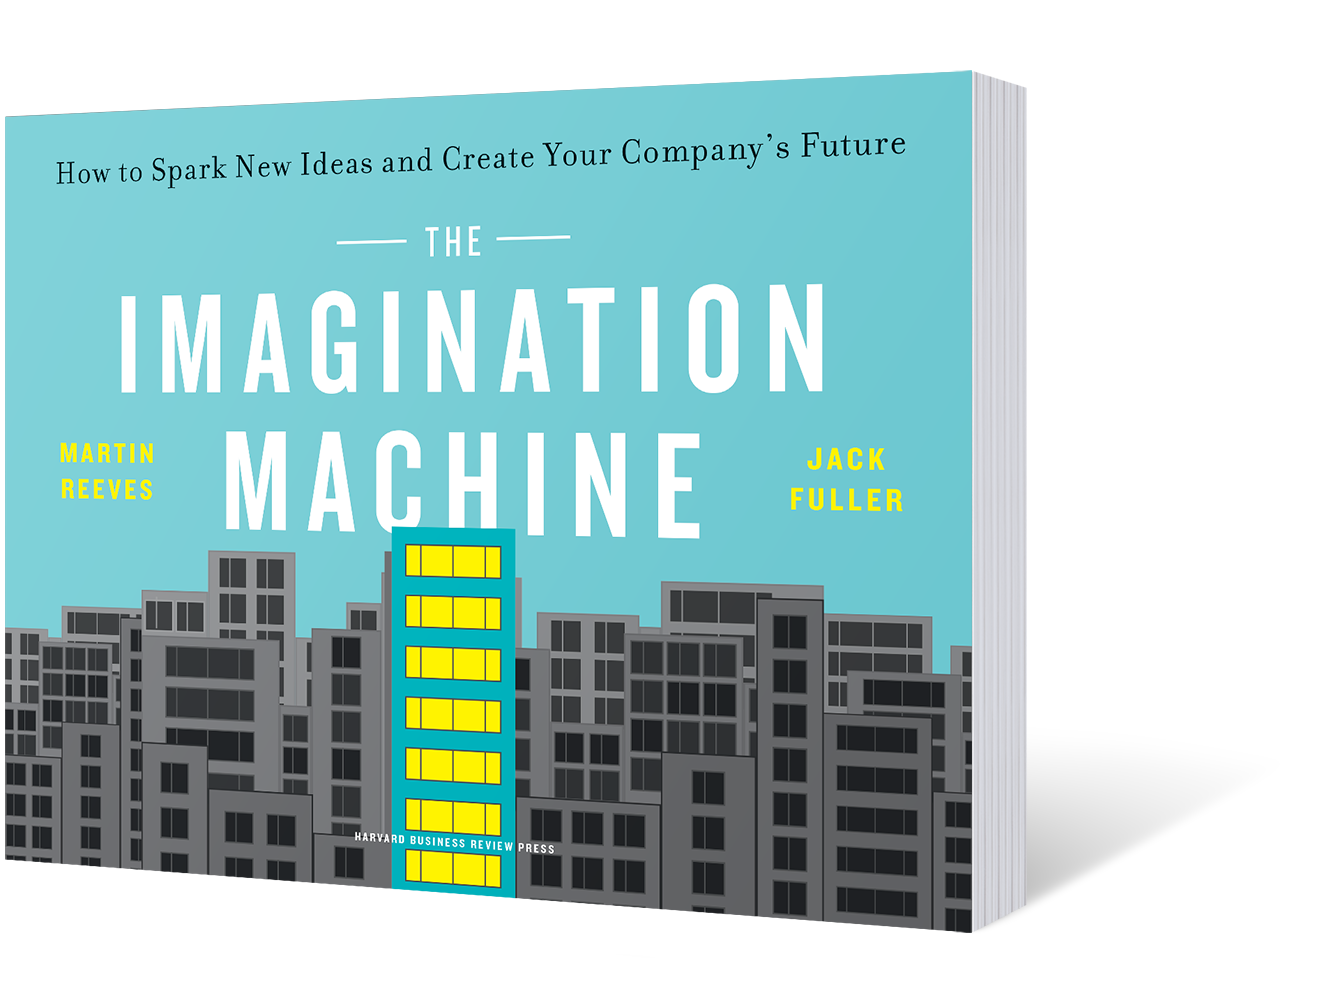 The Imagination Machine